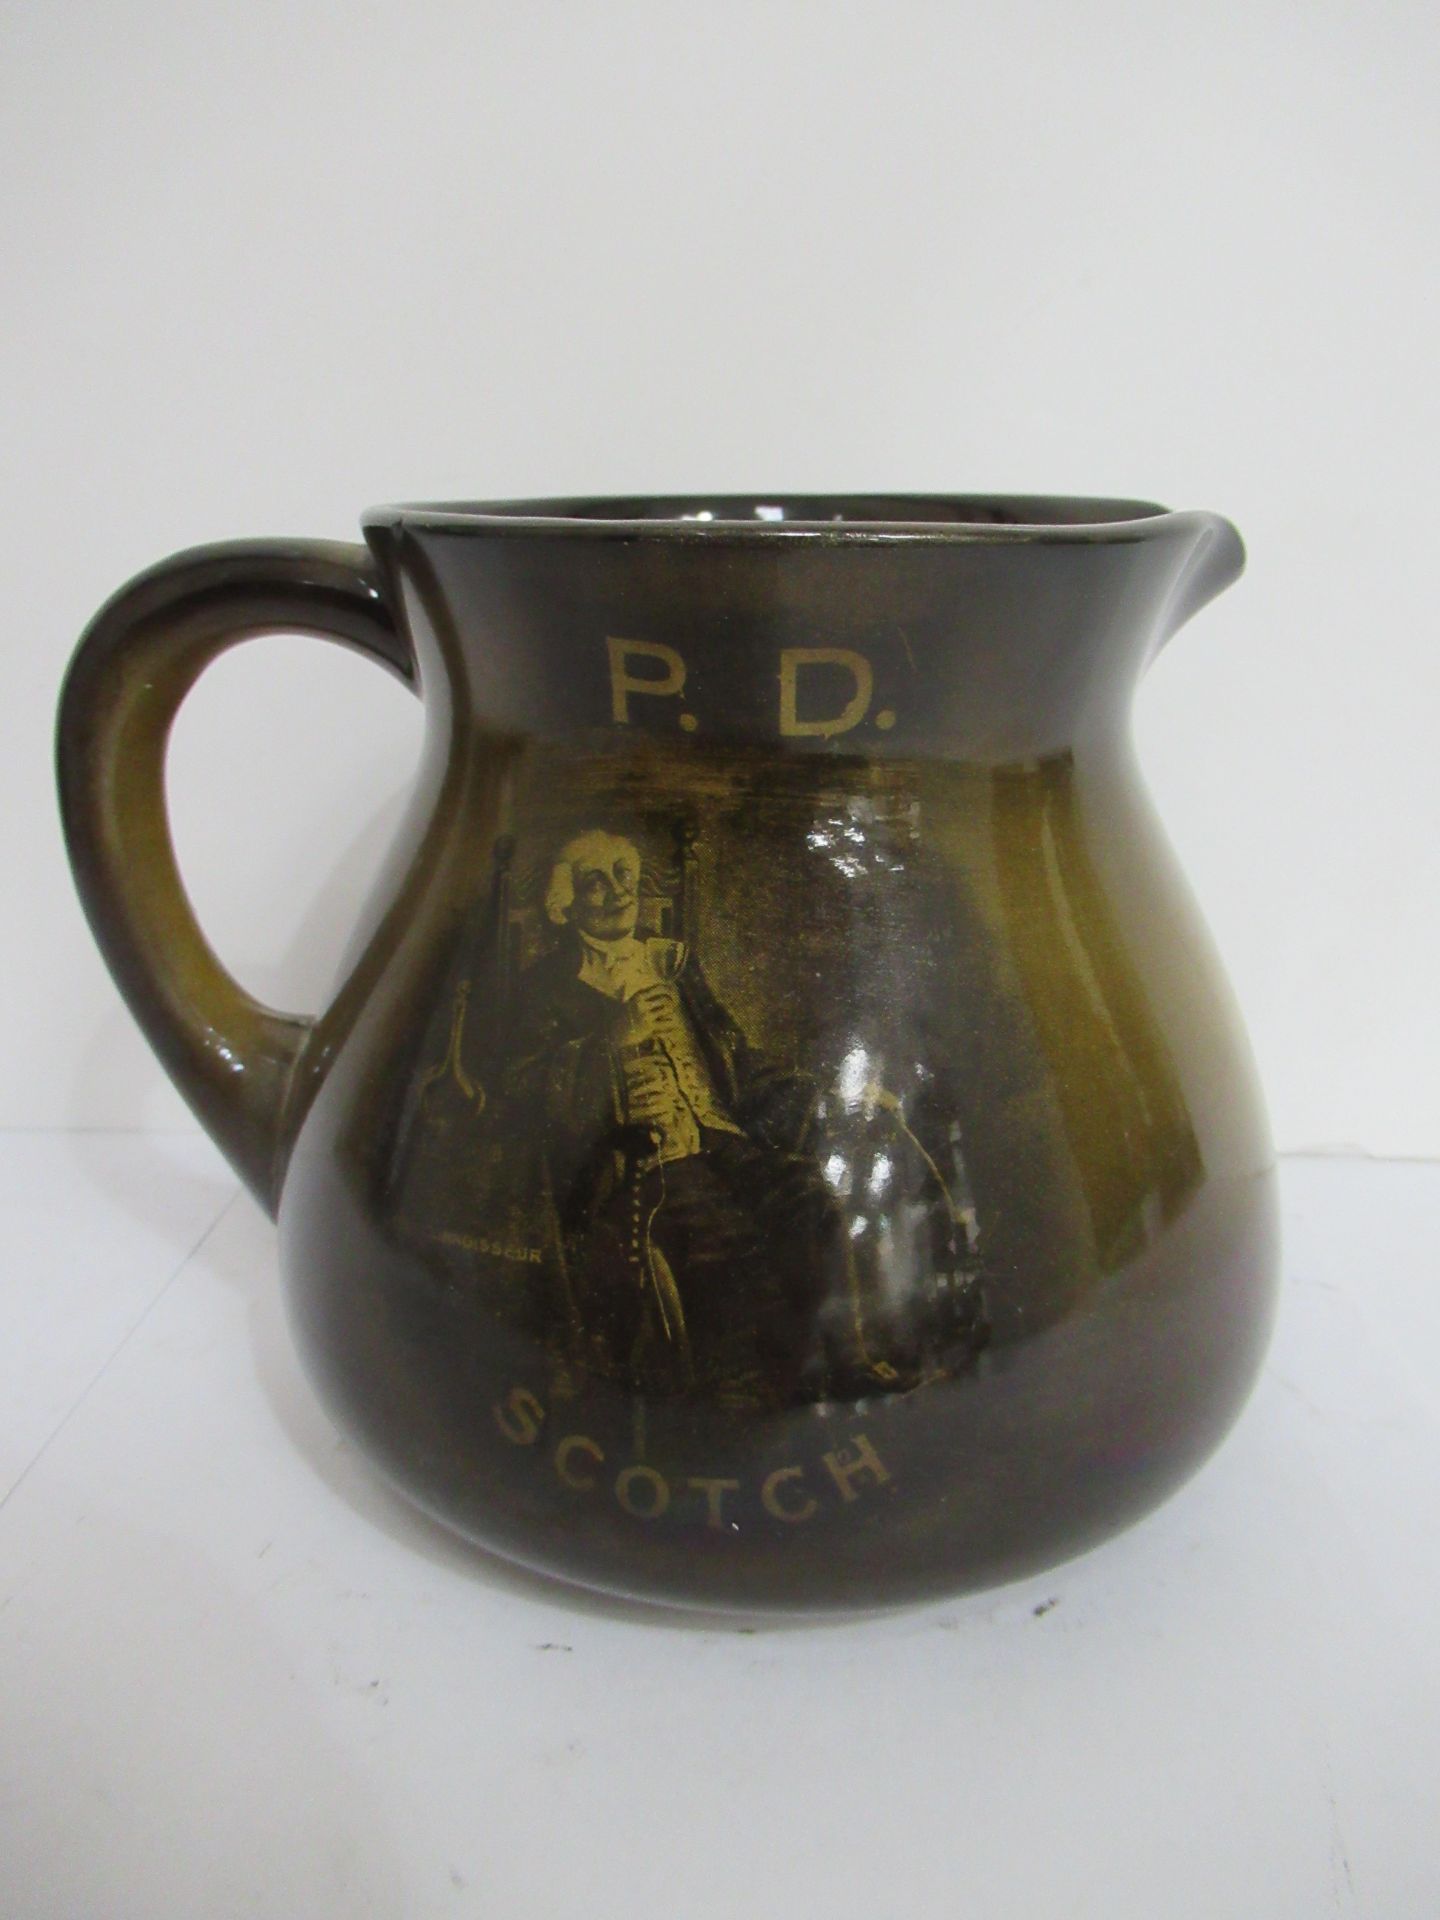 Peter Dawson scotch whisky 'P.D' jug - Image 3 of 6